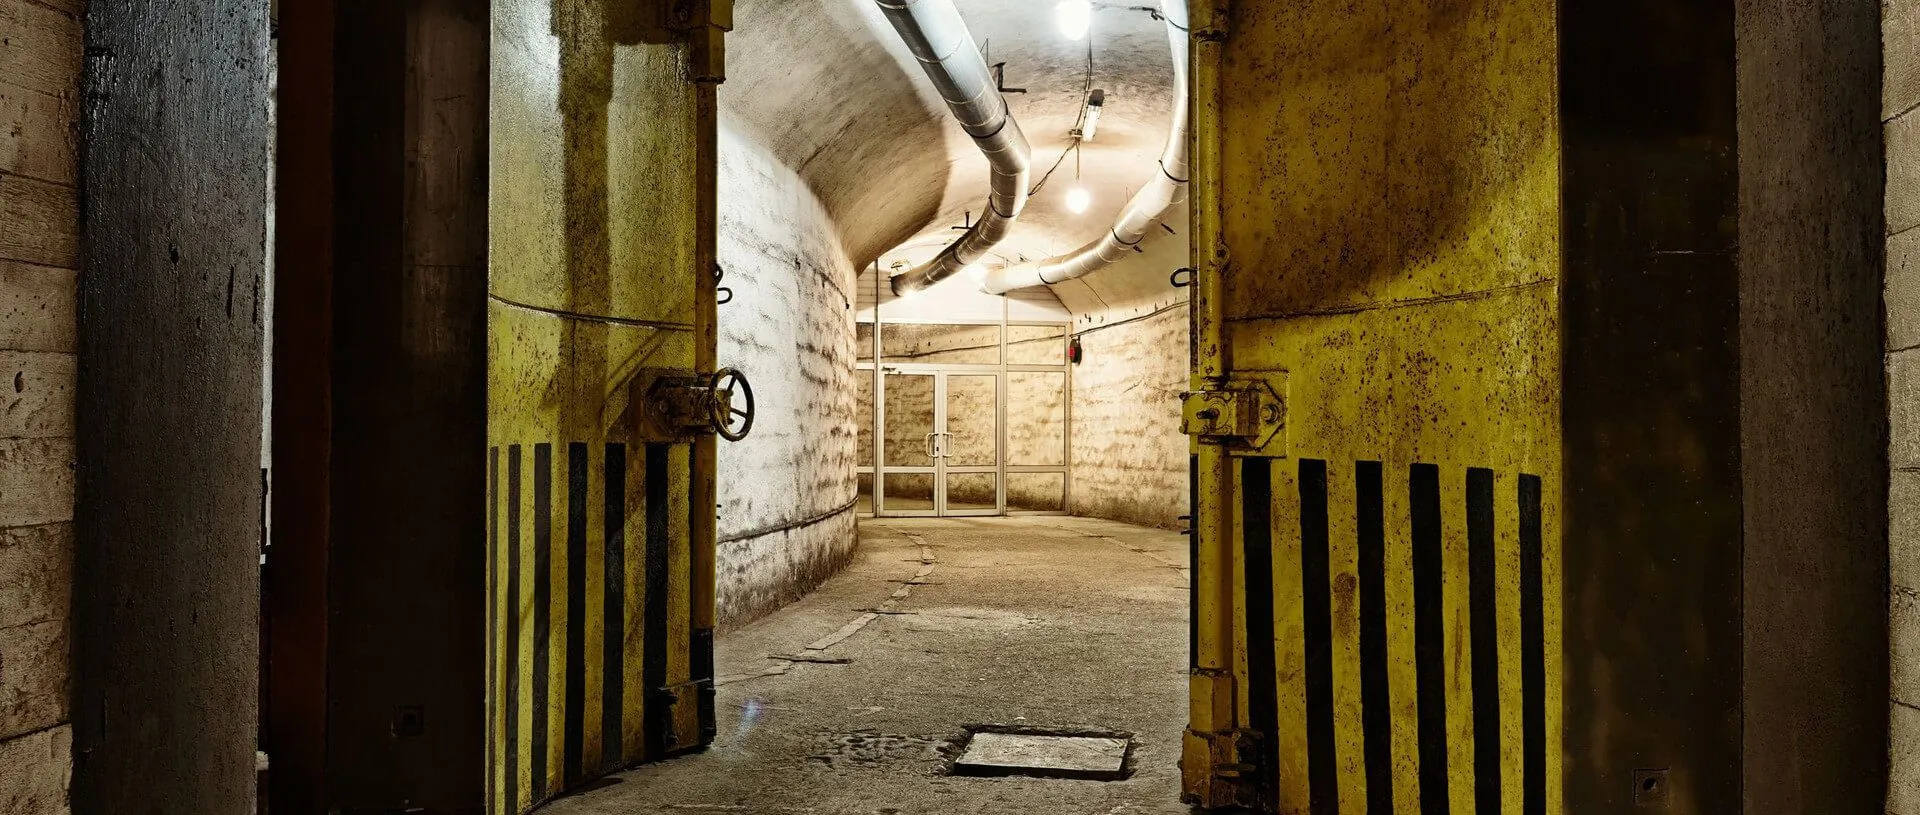 Military Bunker Escape Room